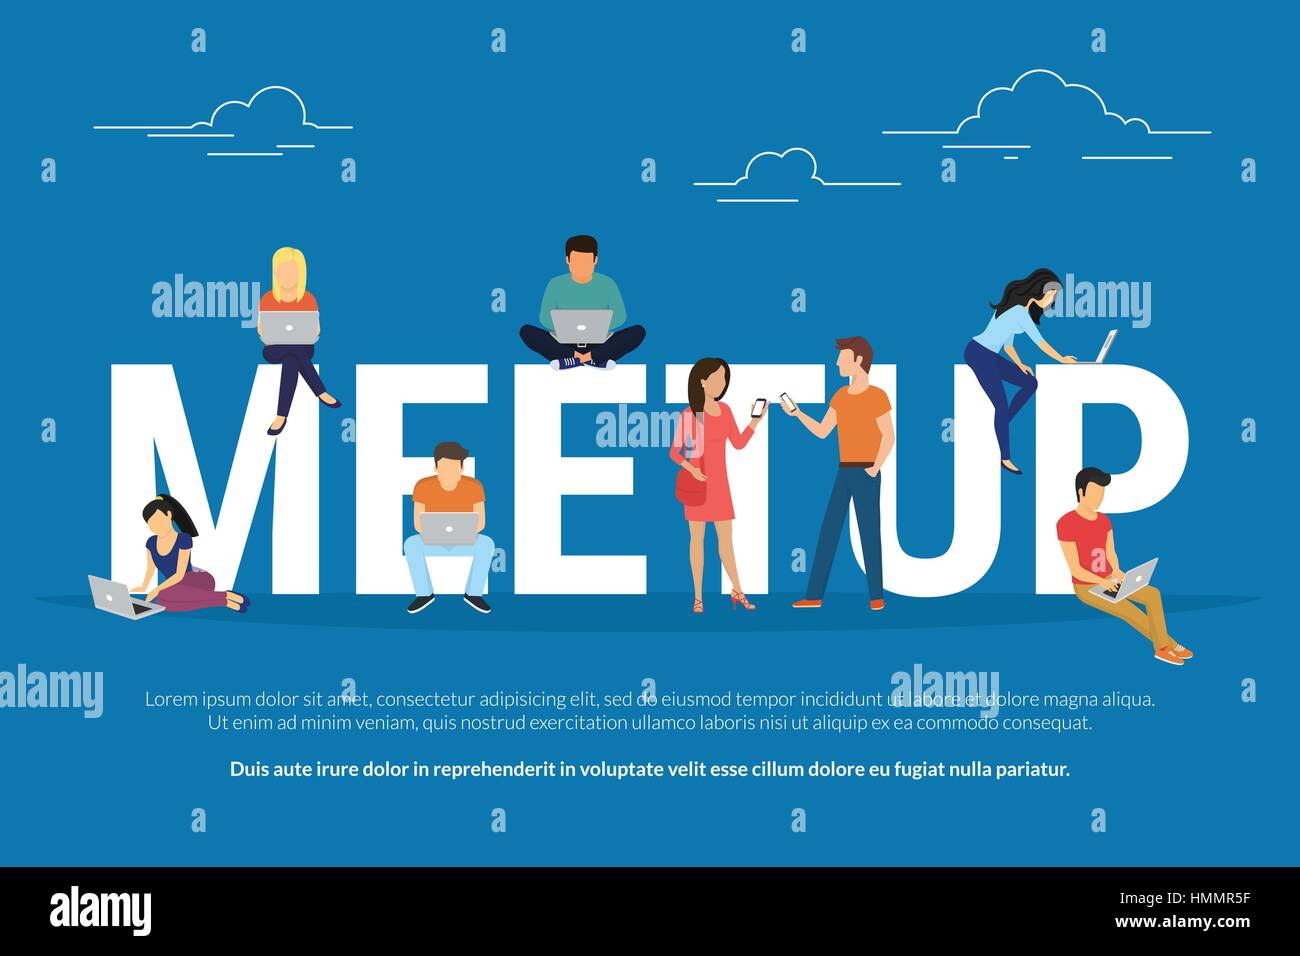 Meetup concept illustration Stock Vector